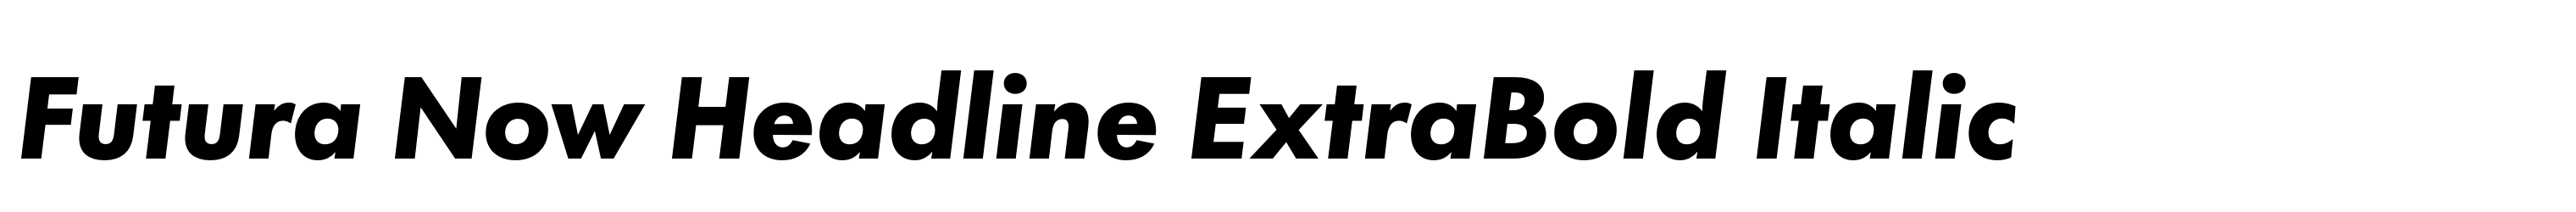 Futura Now Headline ExtraBold Italic